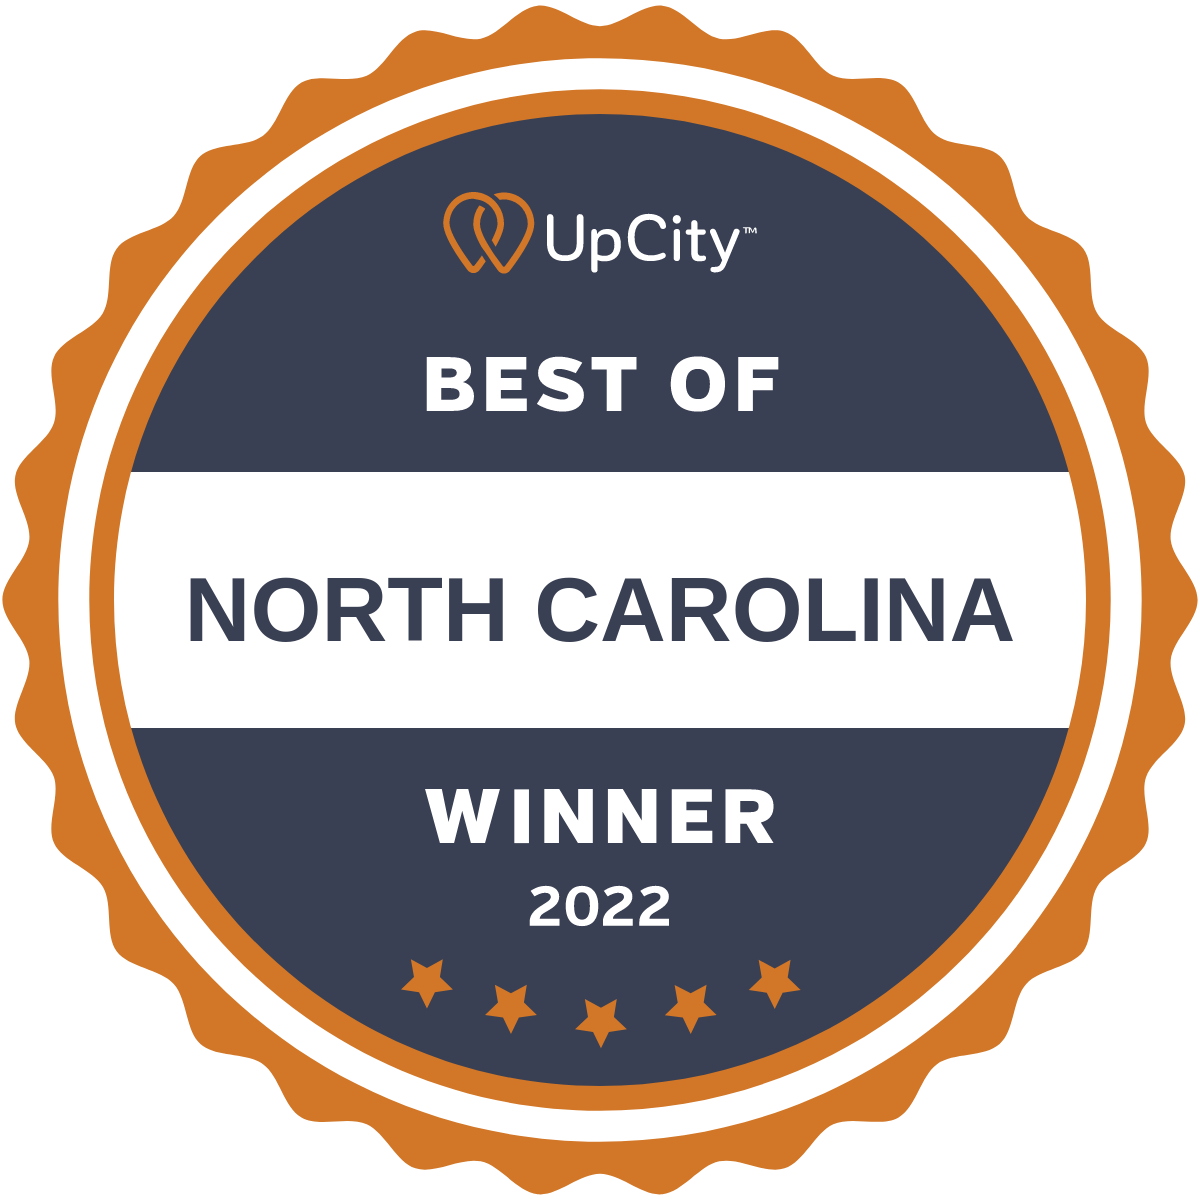 best digital marketing agency in north carolina 2022 award by upcity